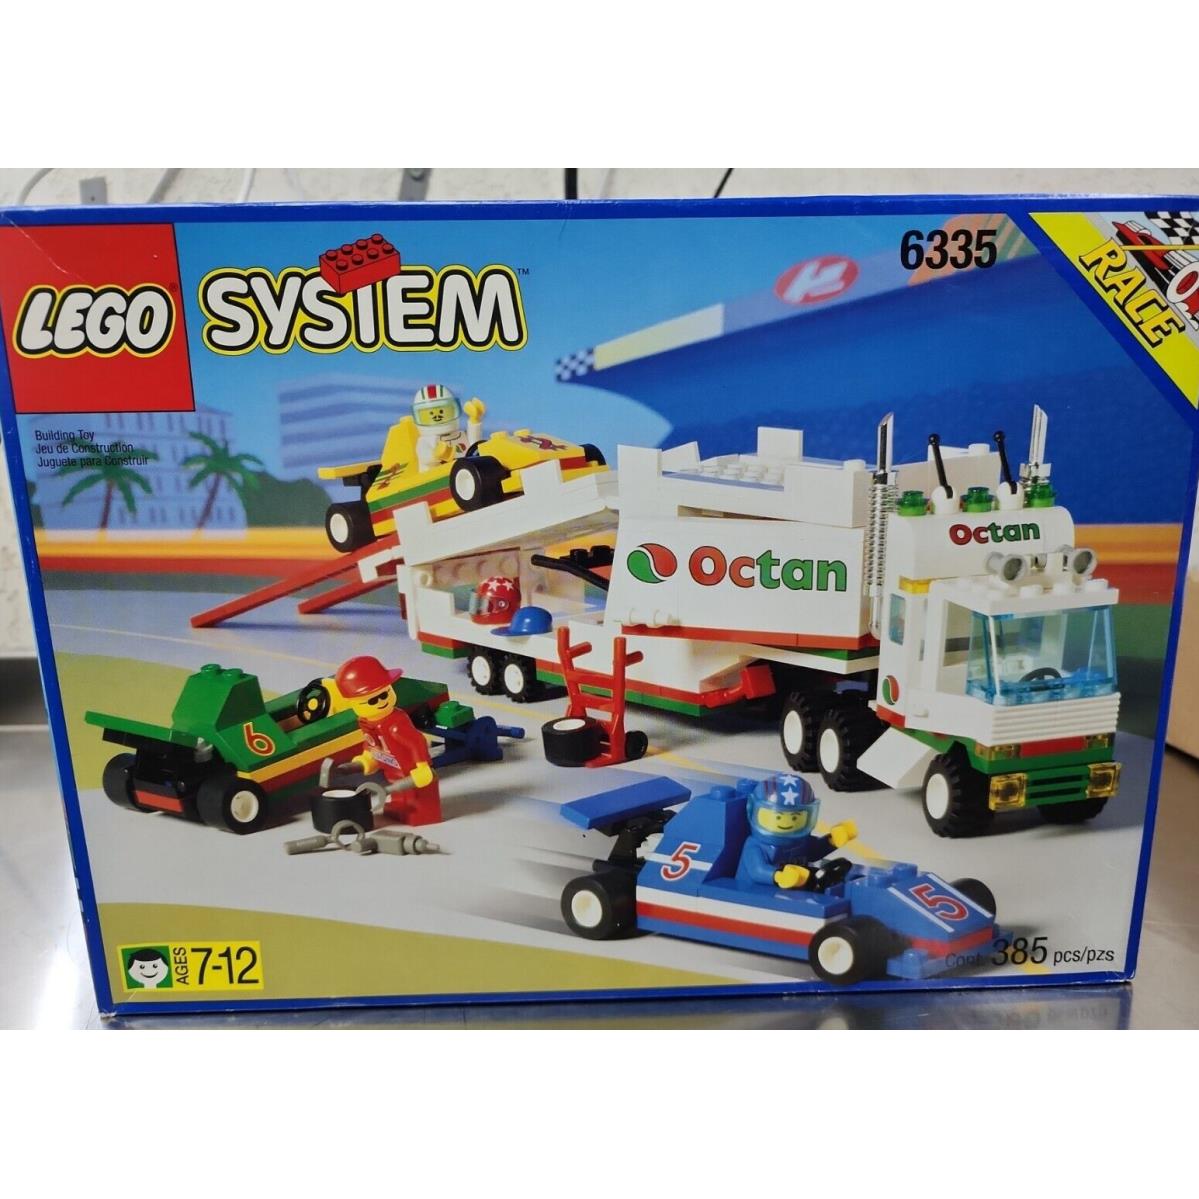 Lego System: Indy Transport 6335 - Retired